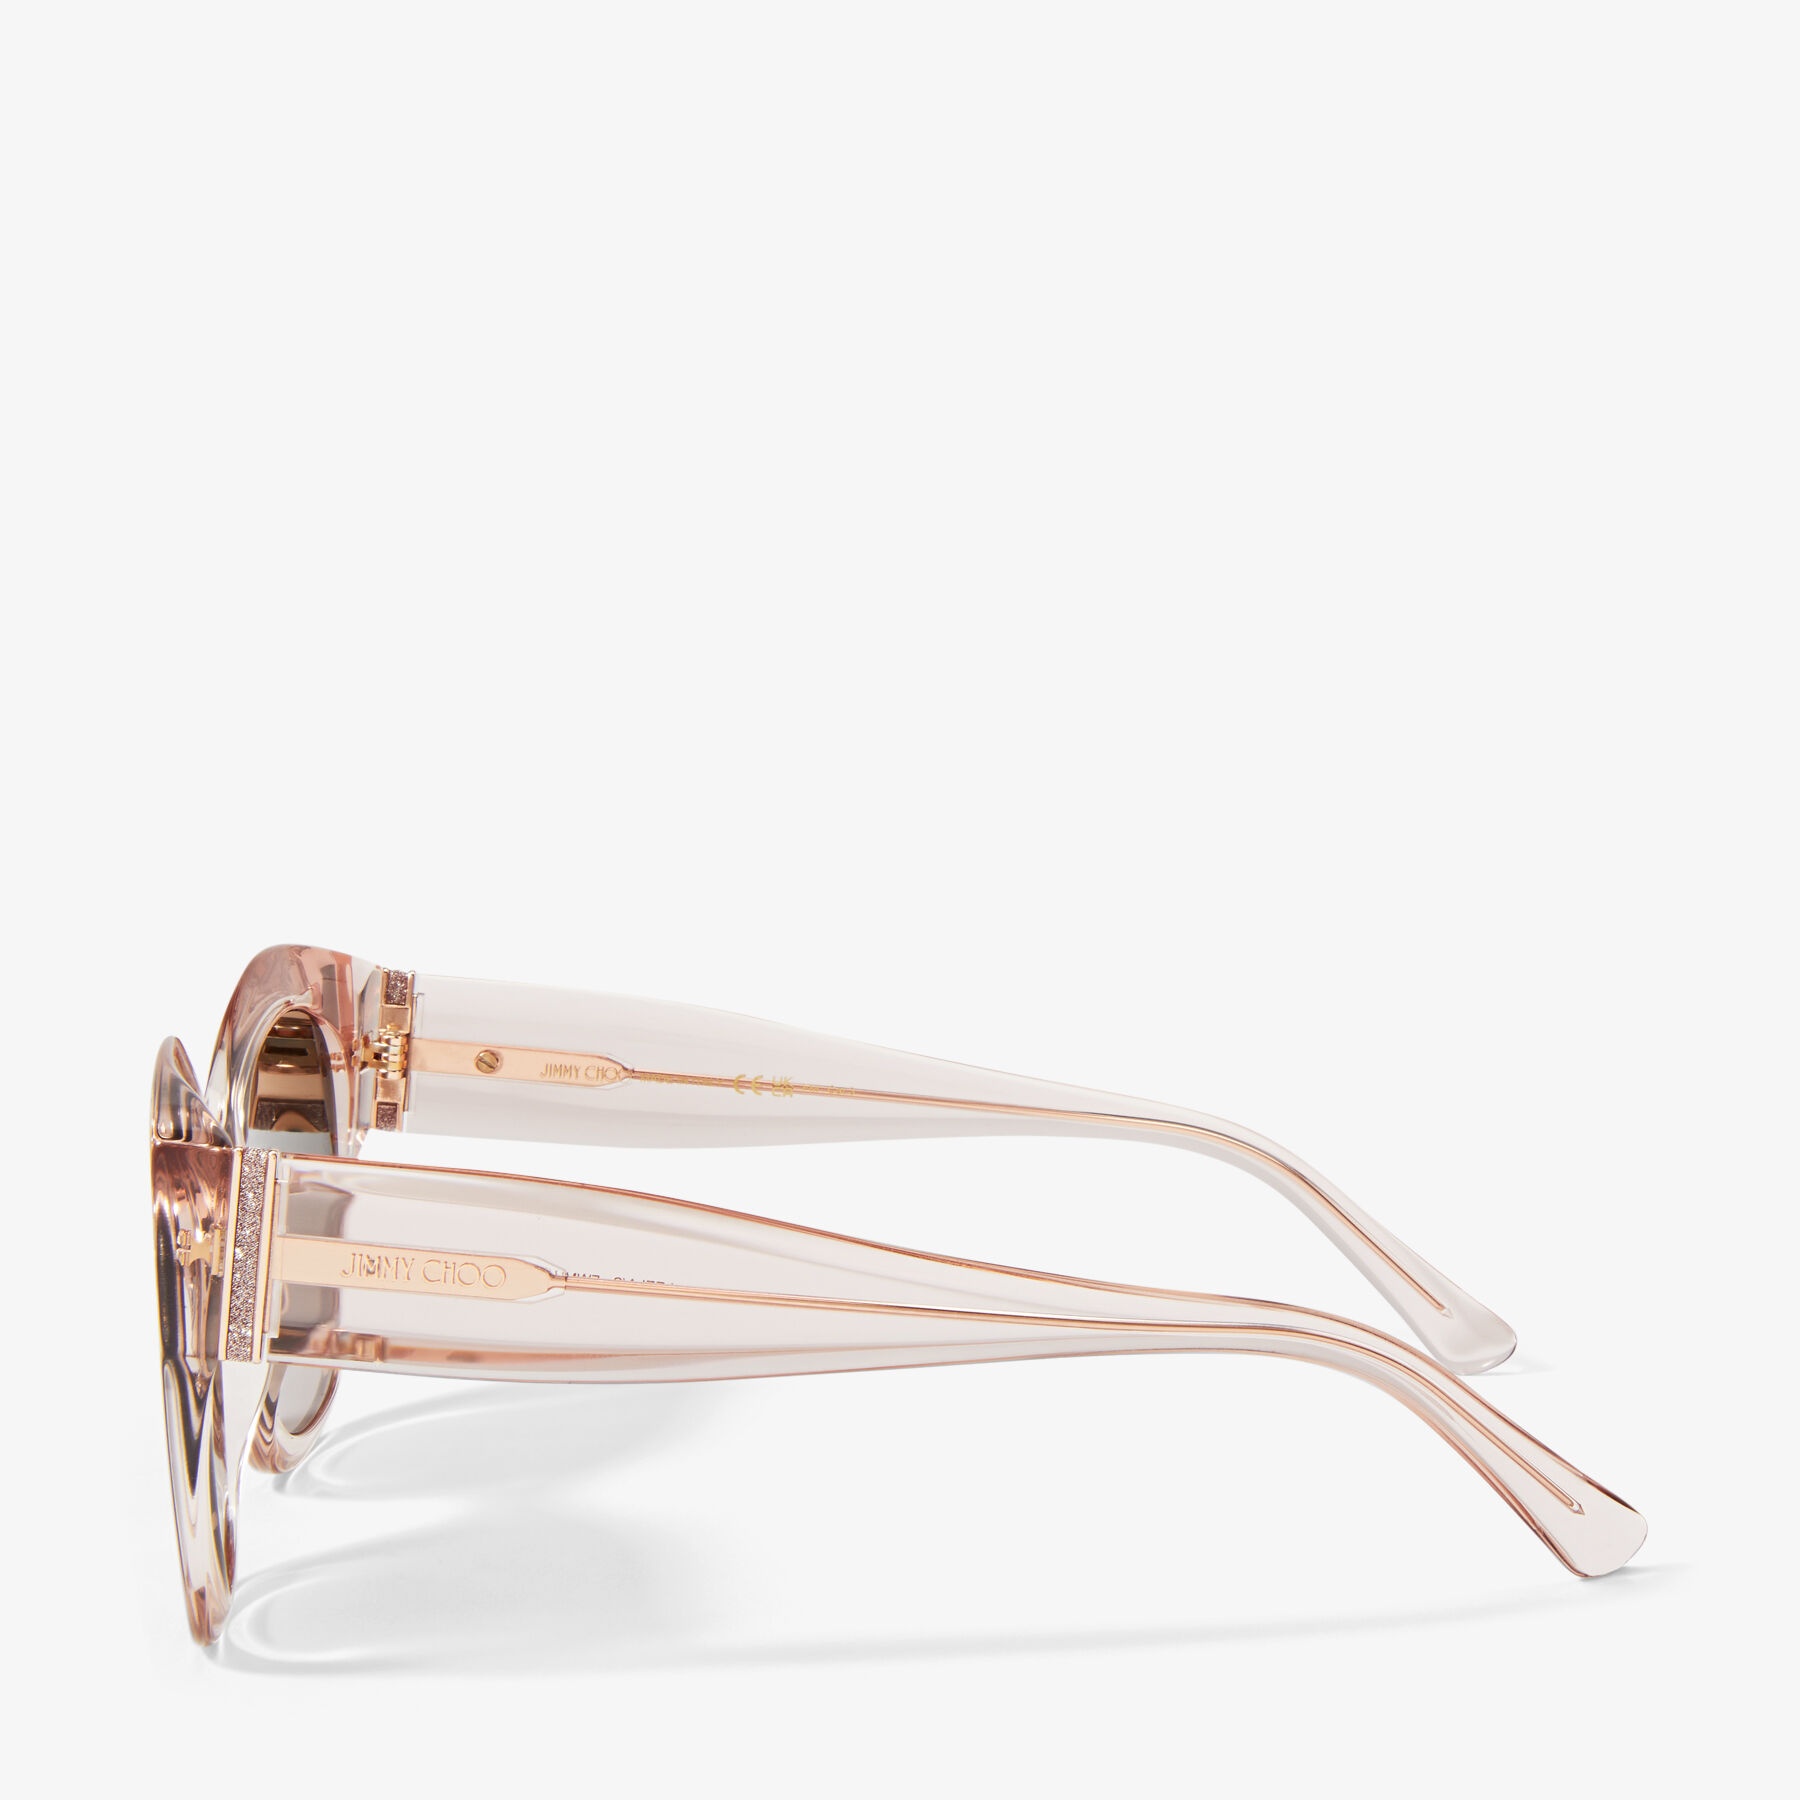 Leela
Nude Square Frame Sunglasses with Glitter - 2